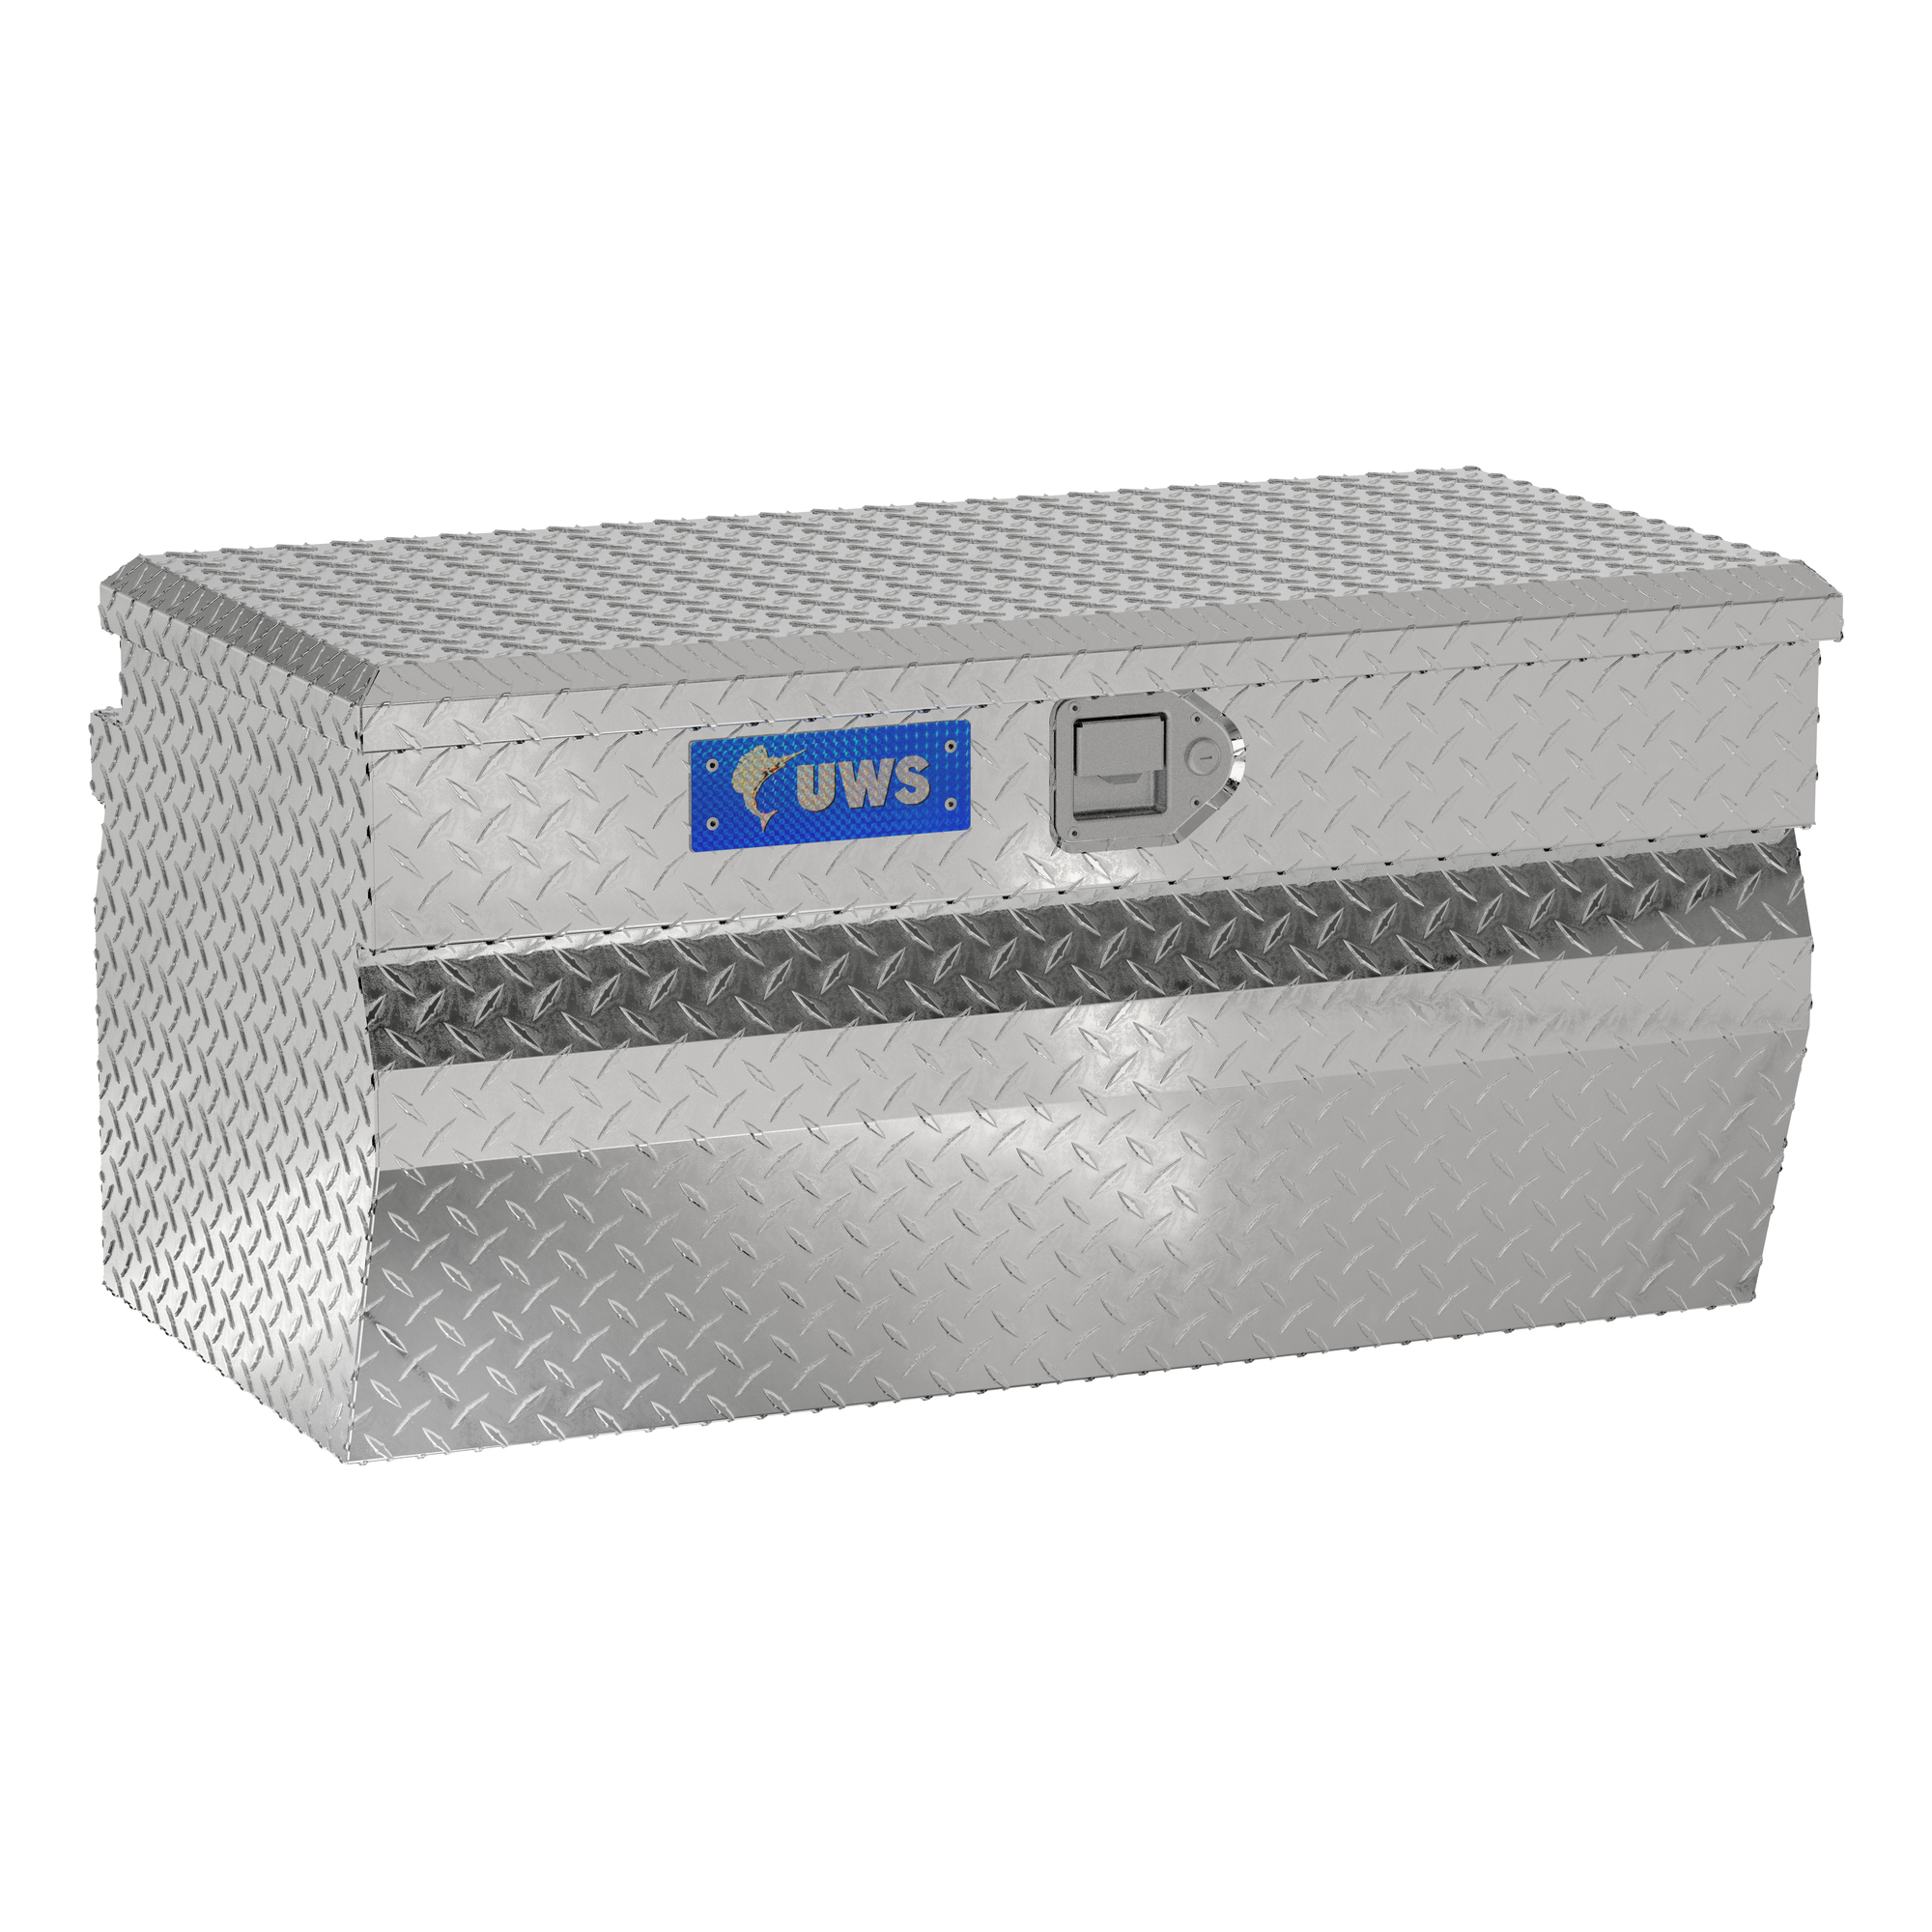 UWS, 36Inch Wedge Utility Chest Box, Width 36.75 in, Material Aluminum, Color Finish Bright Aluminum, Model EC20161